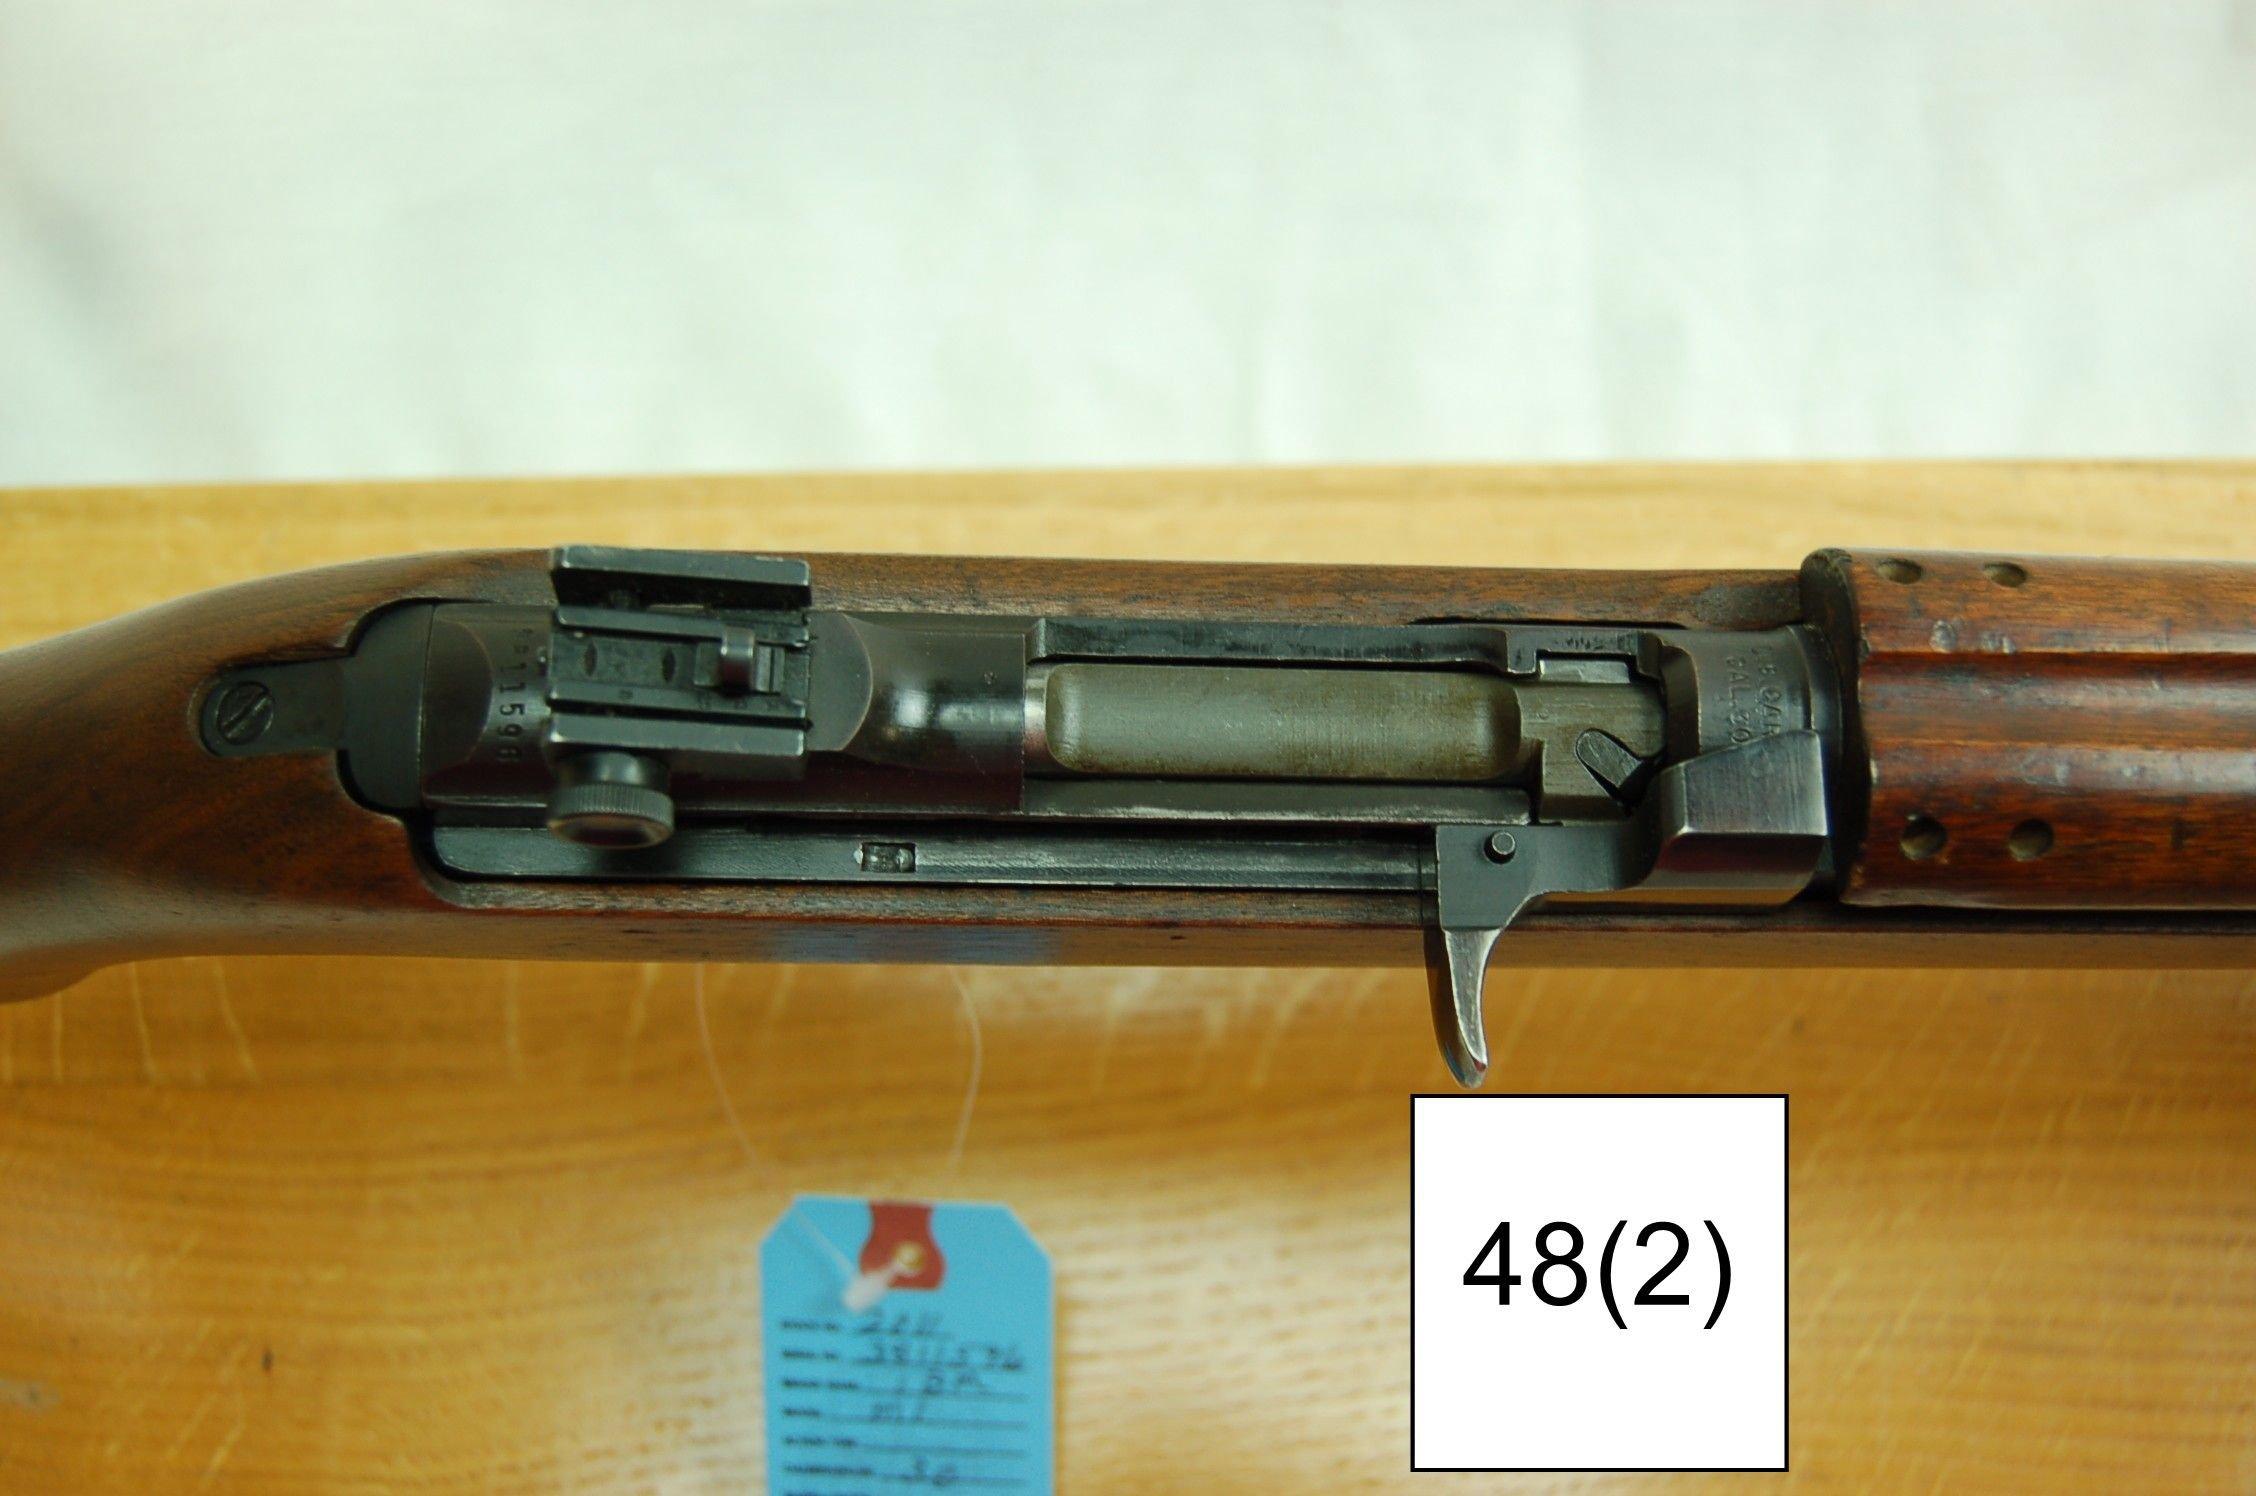 M-1 Carbine    I.B.M.    Walnut Stock   Condition: Very Good